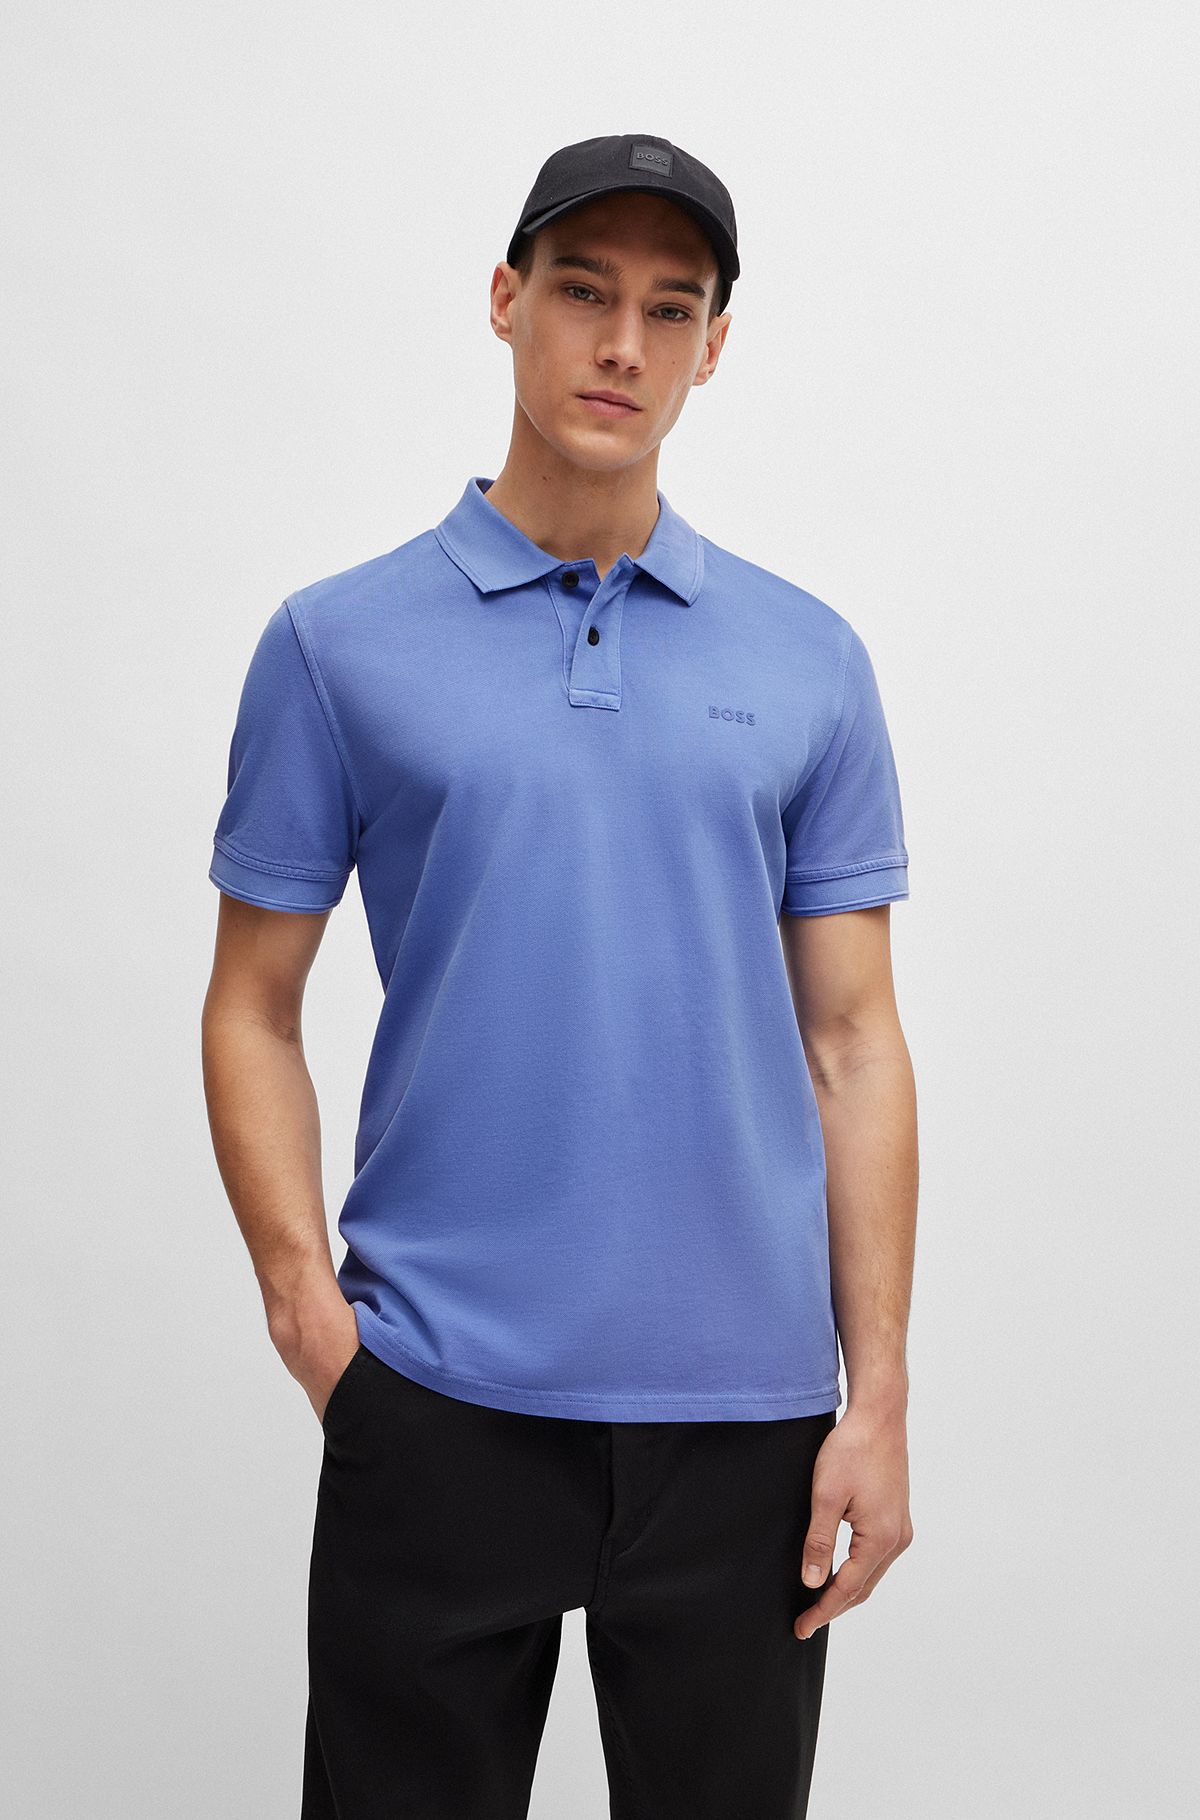 Cotton-piqué polo shirt with logo print, Purple